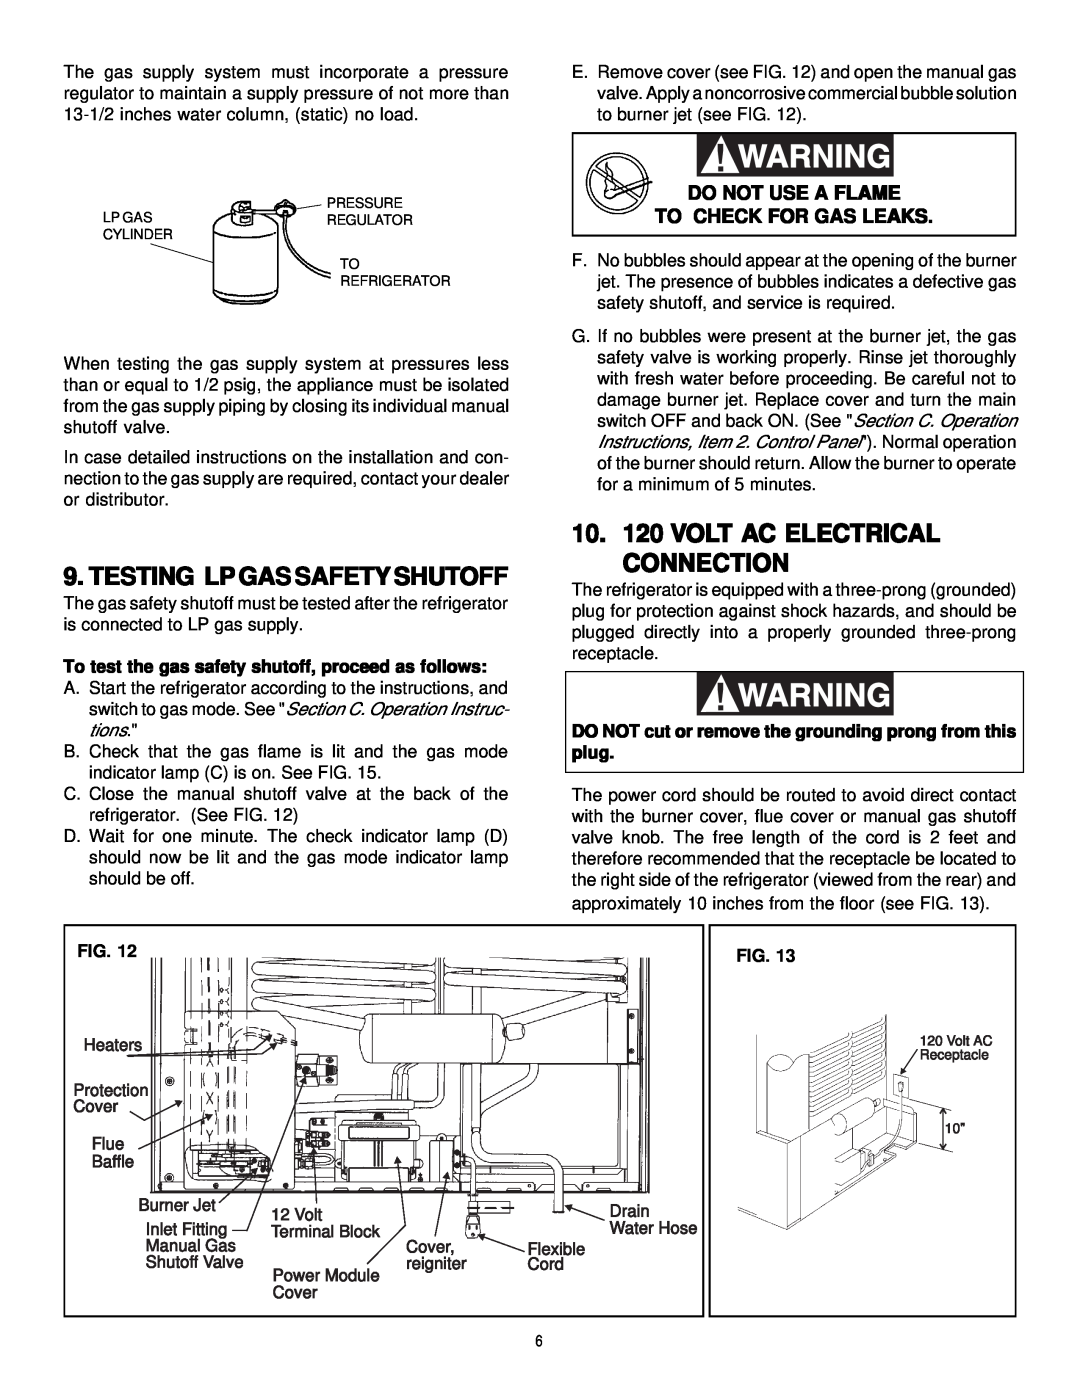 Dometic Elite RM7732 manual Testing Lpgassafetyshutoff, 10. 120 VOLT AC ELECTRICAL CONNECTION 